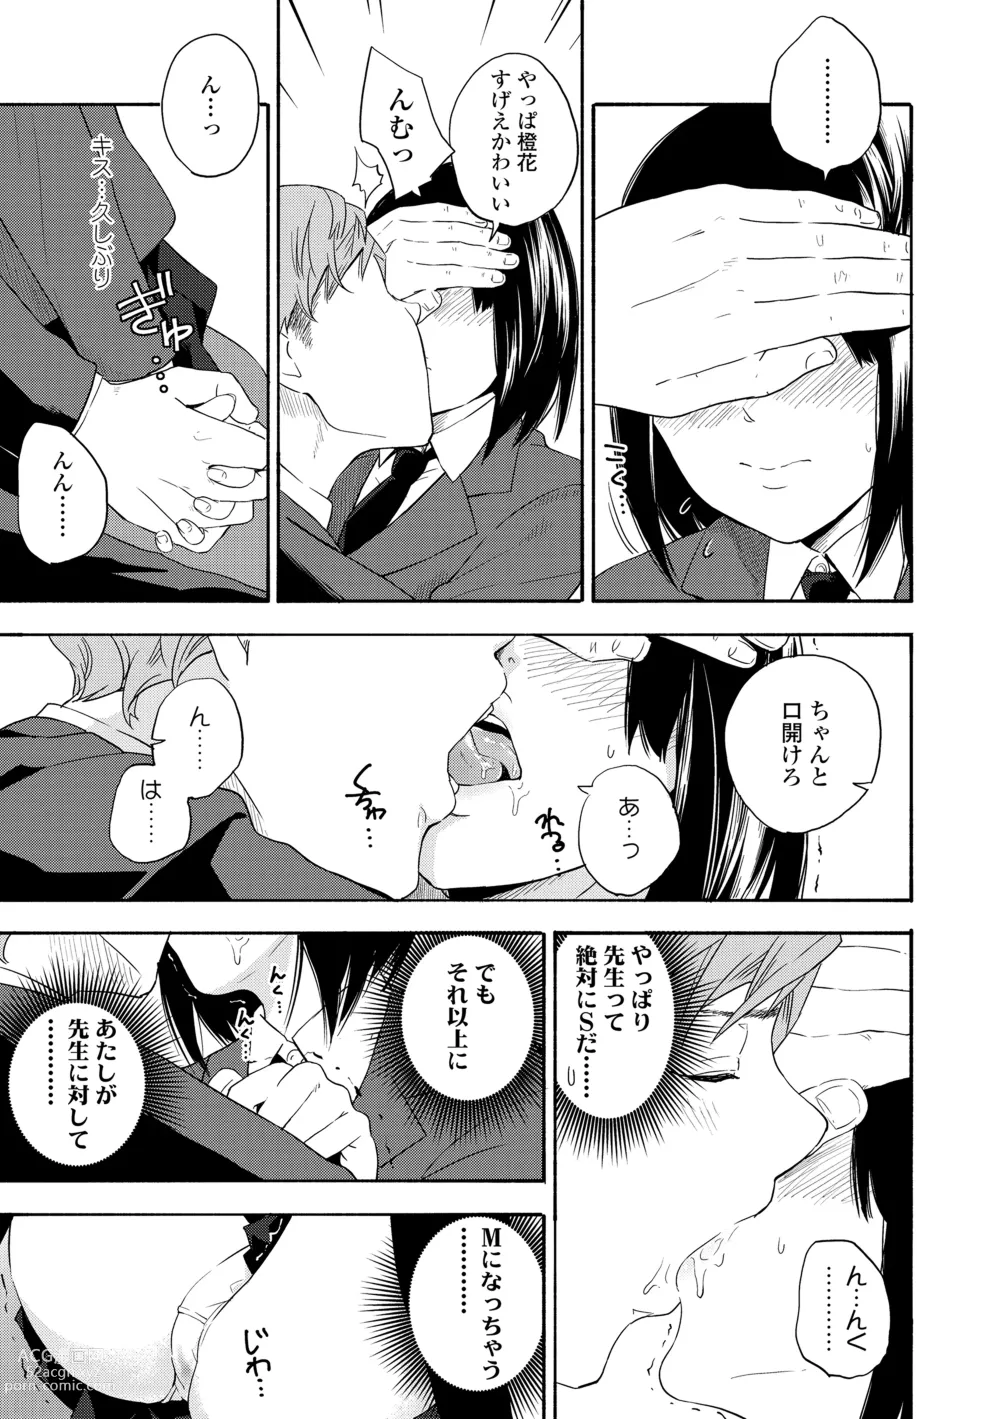 Page 9 of manga Shishunki no Eros - puberty eros + DLsite Kounyu Tokuten